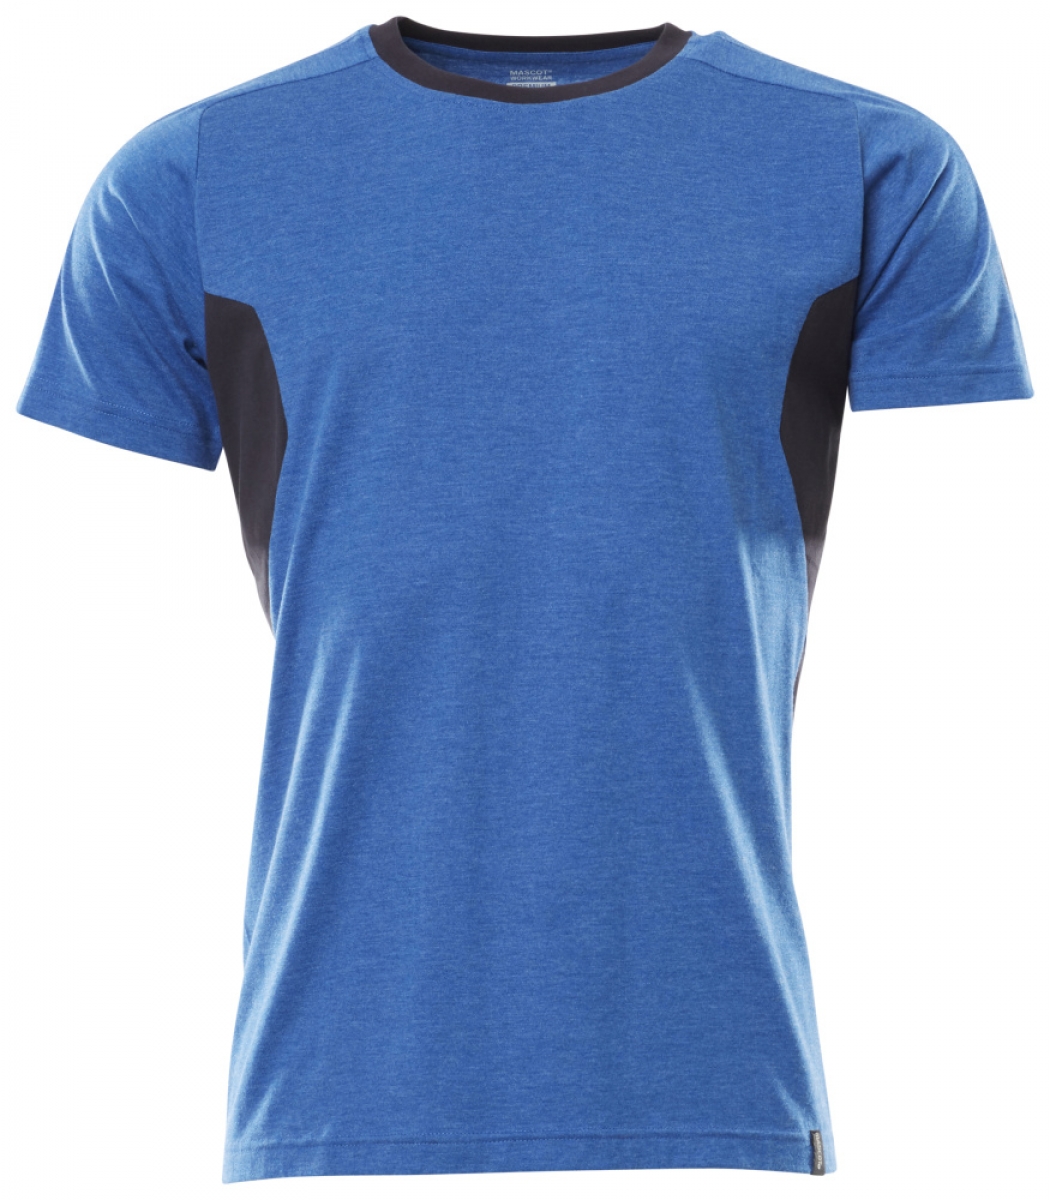 MASCOT-Worker-Shirts, Damen-T-Shirt, 195 g/m, azurblau/schwarzblau